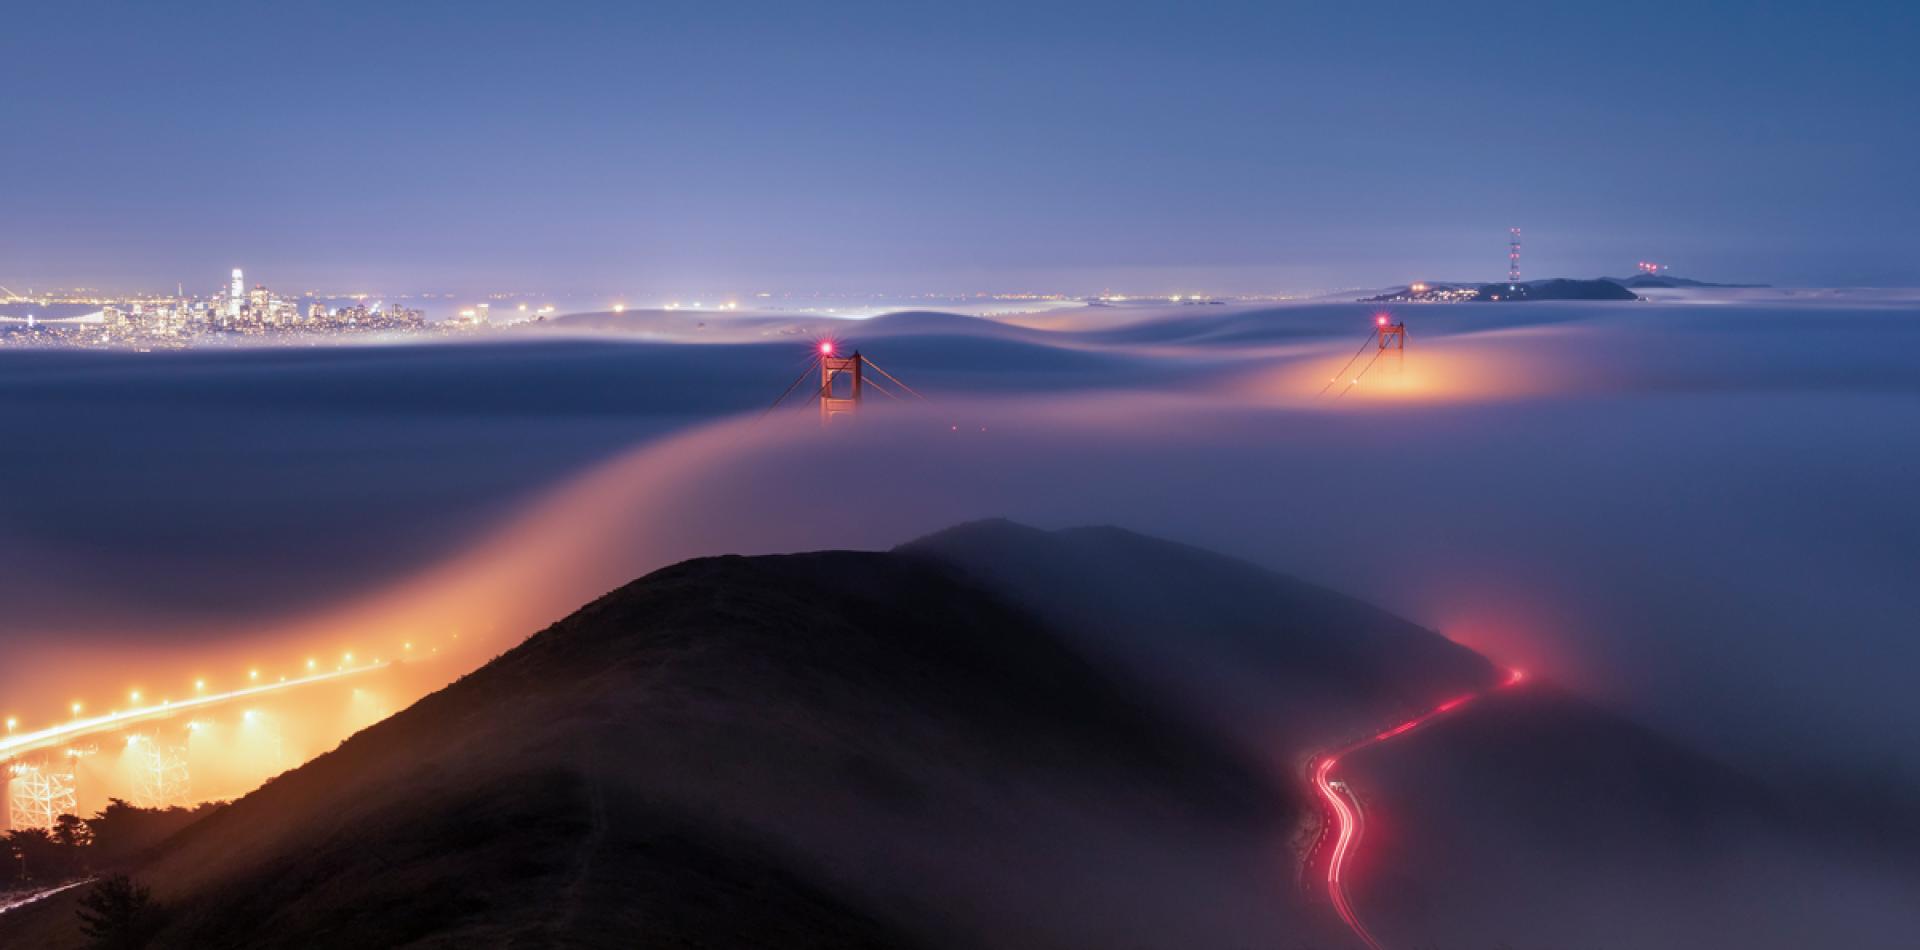 London Photography Awards Winner - Golden Gate Bridge in Fog